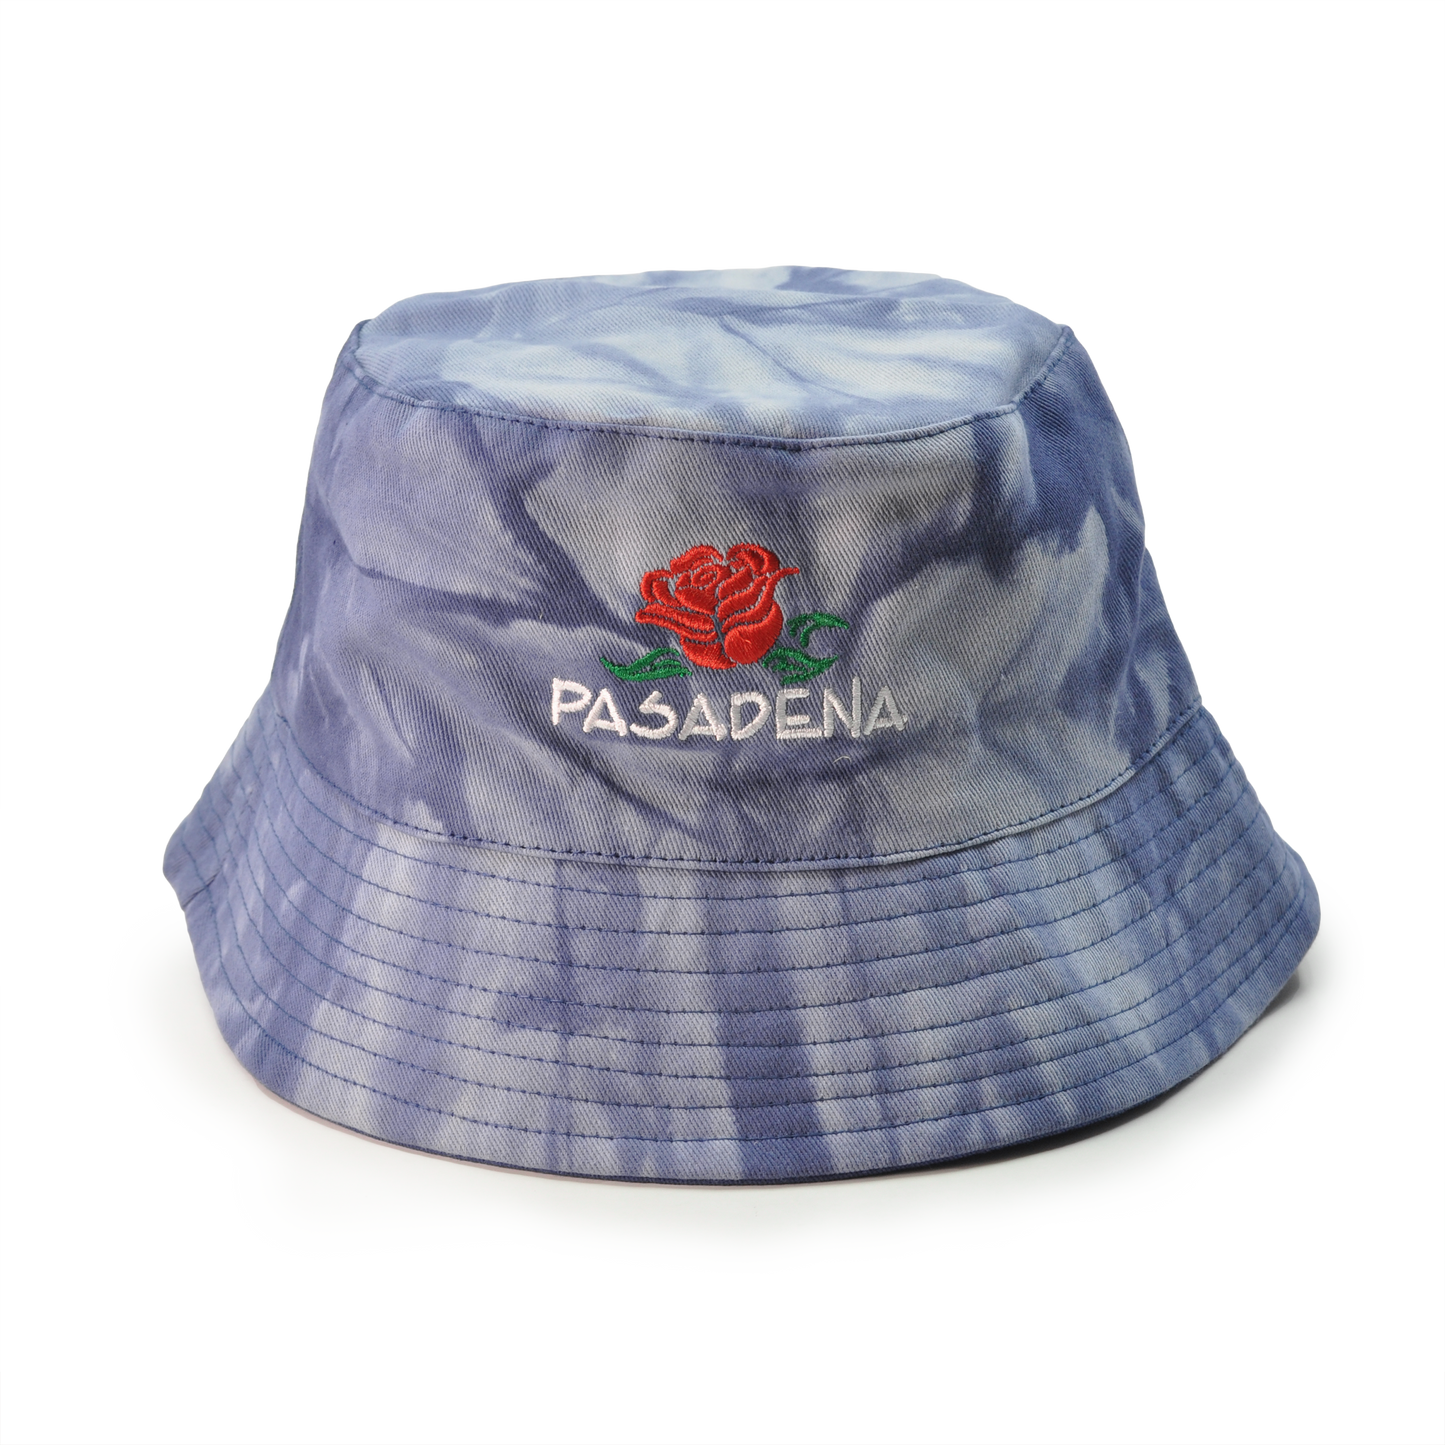 Reversible Your Beach City Unisex 100% Cotton Packable Summer Travel Bucket Beach Sun Hat Outdoor Cap. (Tie Dye Blue/Blue)